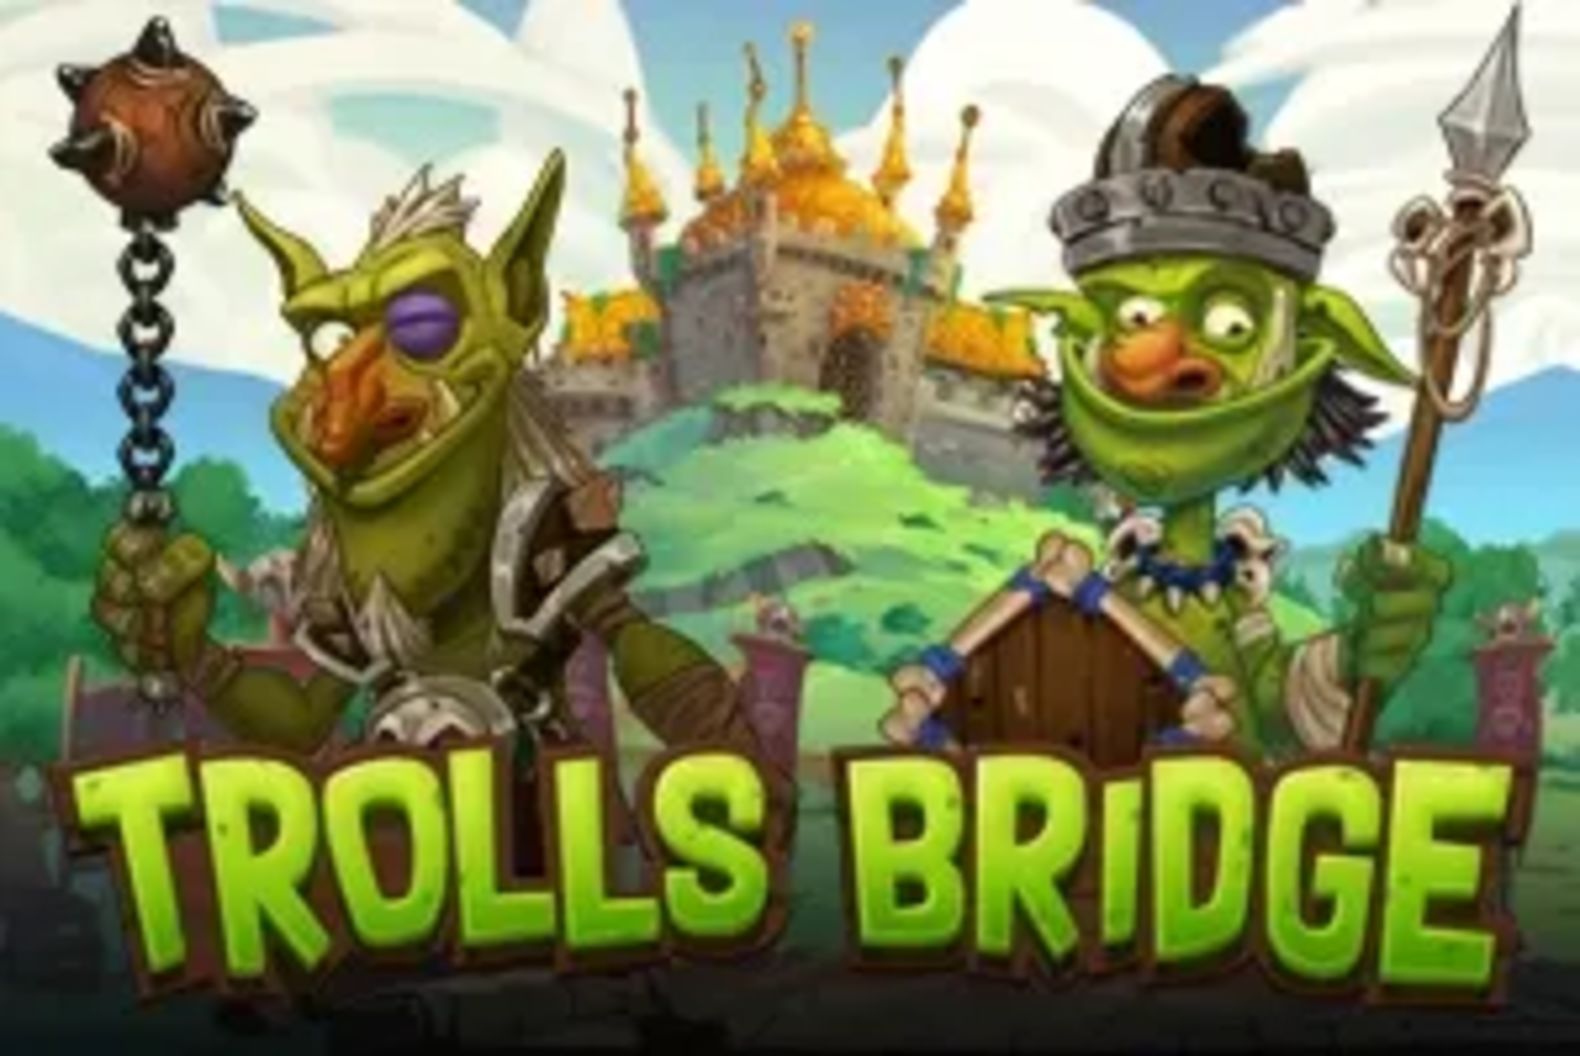 Trolls Bridge